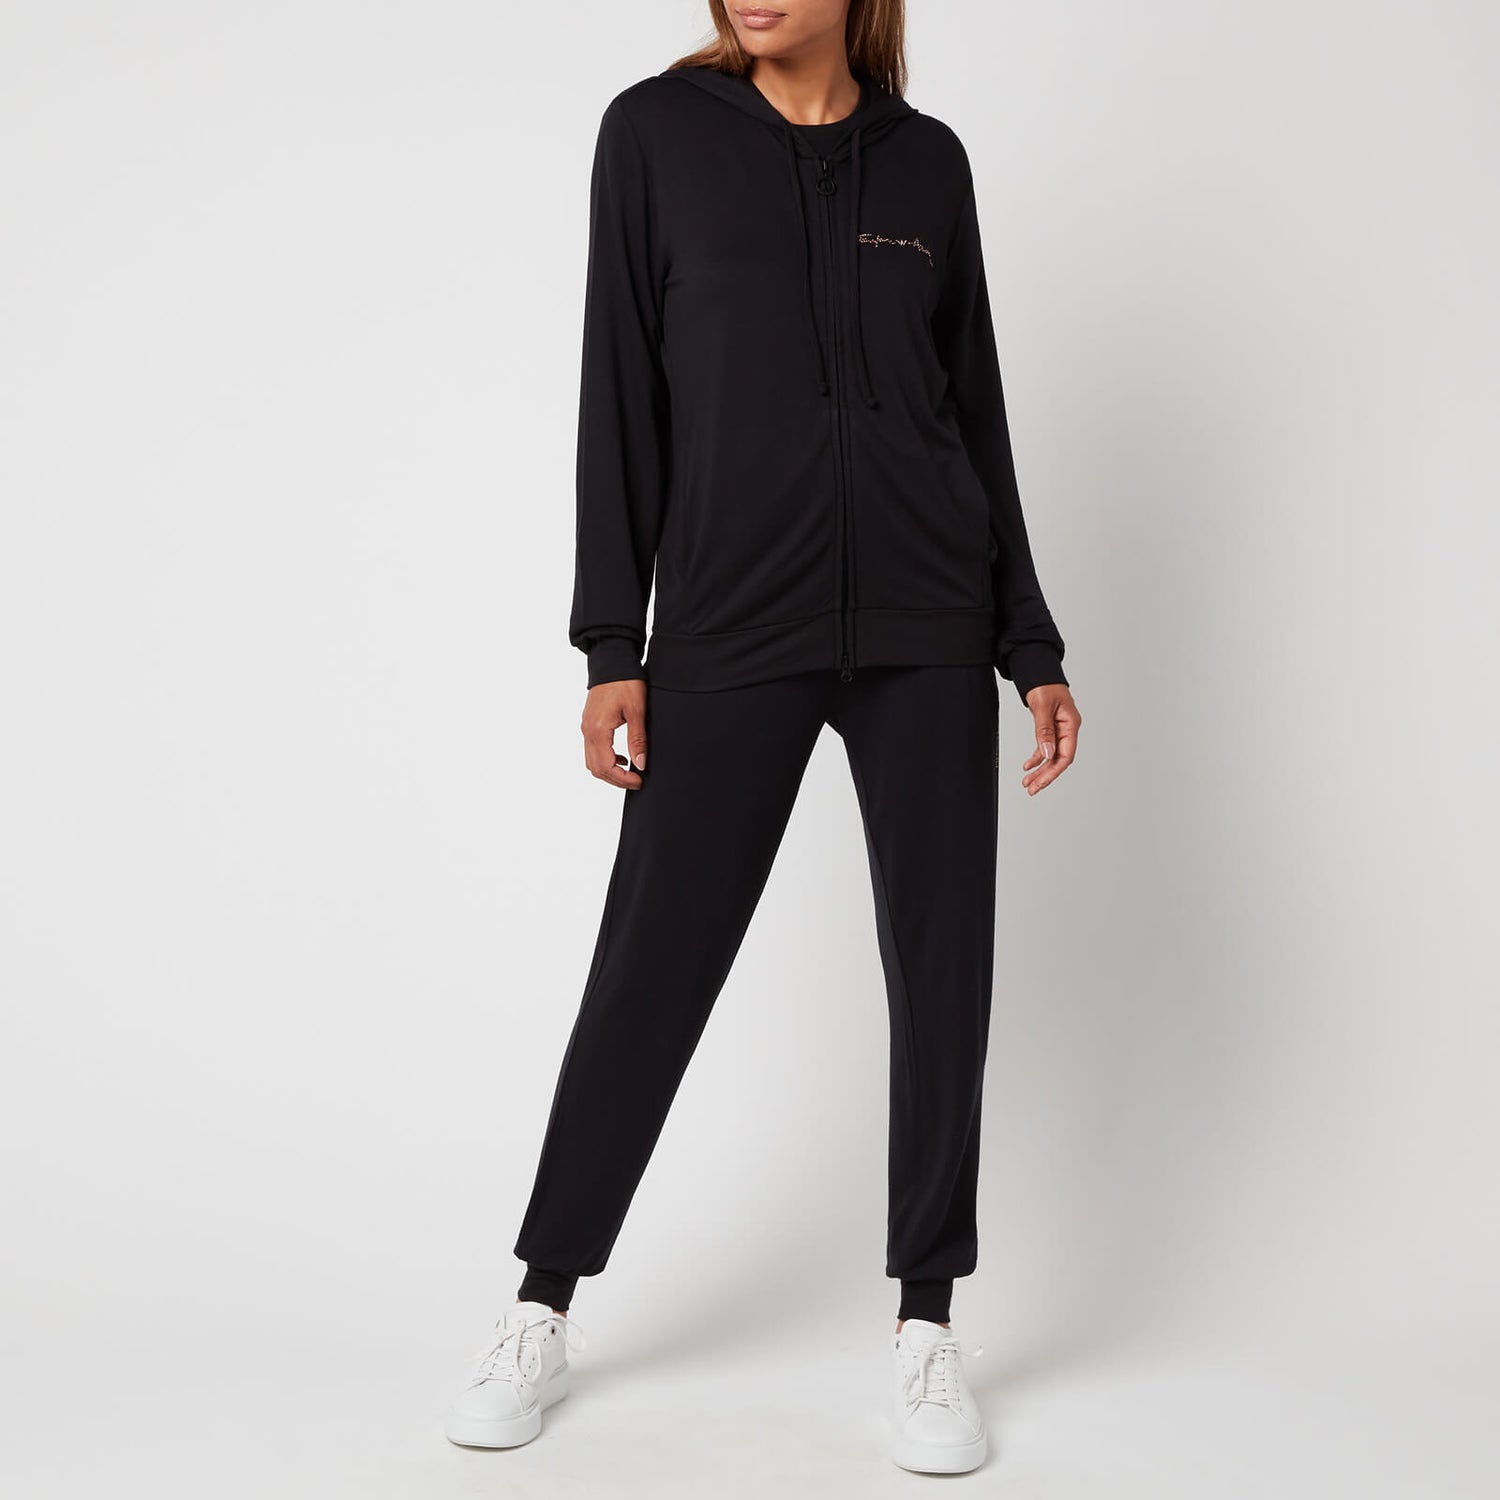 Emporio Armani Loungewear Women's Signature Full Zip Jacket And Pants - Black